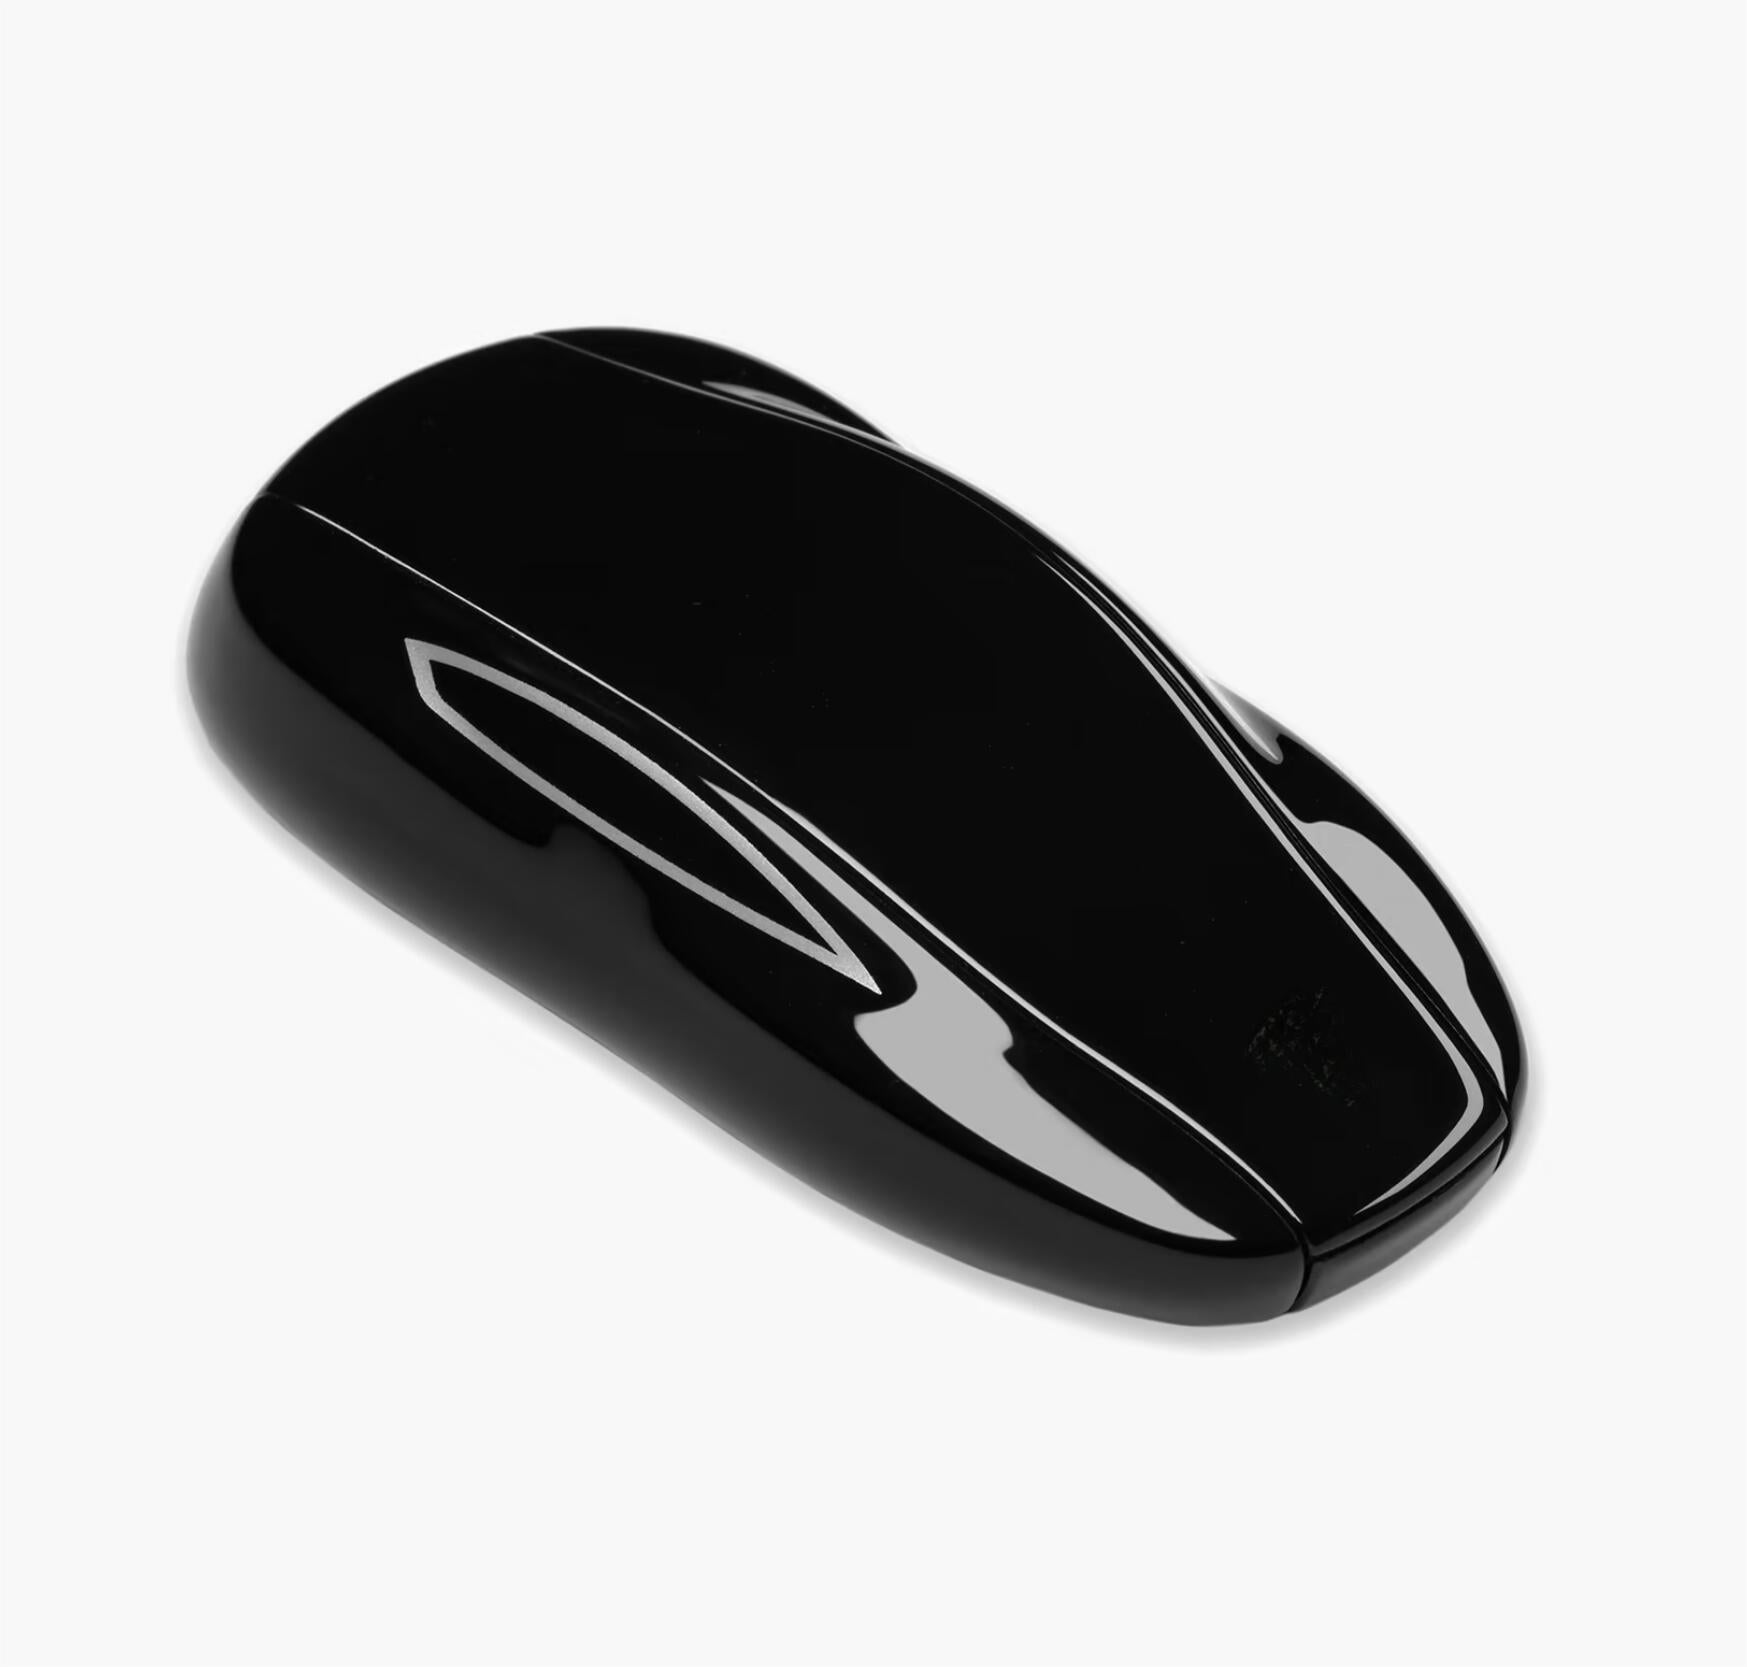 Key Card Modification Key Fob for Tesla Model 3/Model Y 2017-2023 - Tesery Official Store